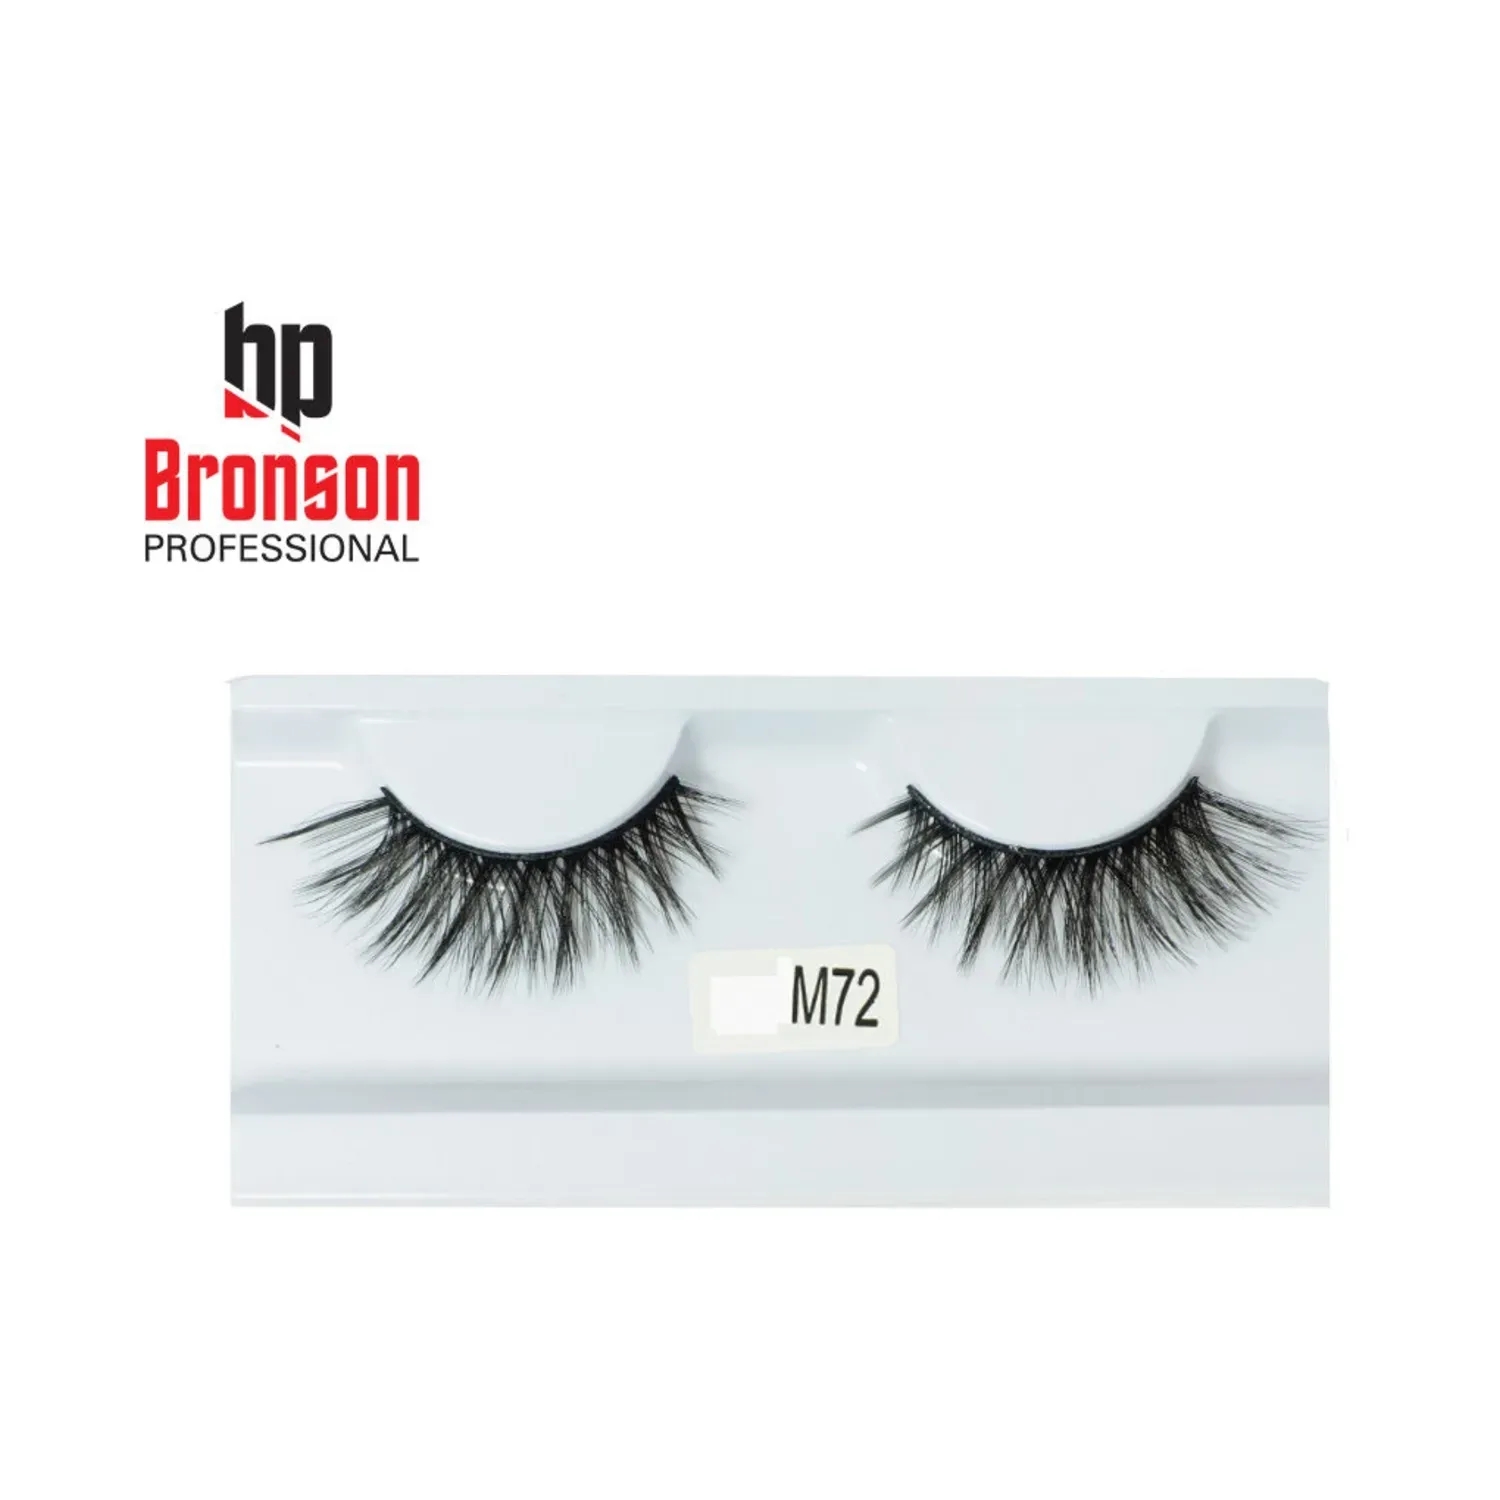 Bronson Professional 3D Eyelashes - M72 Black (1 Pair)